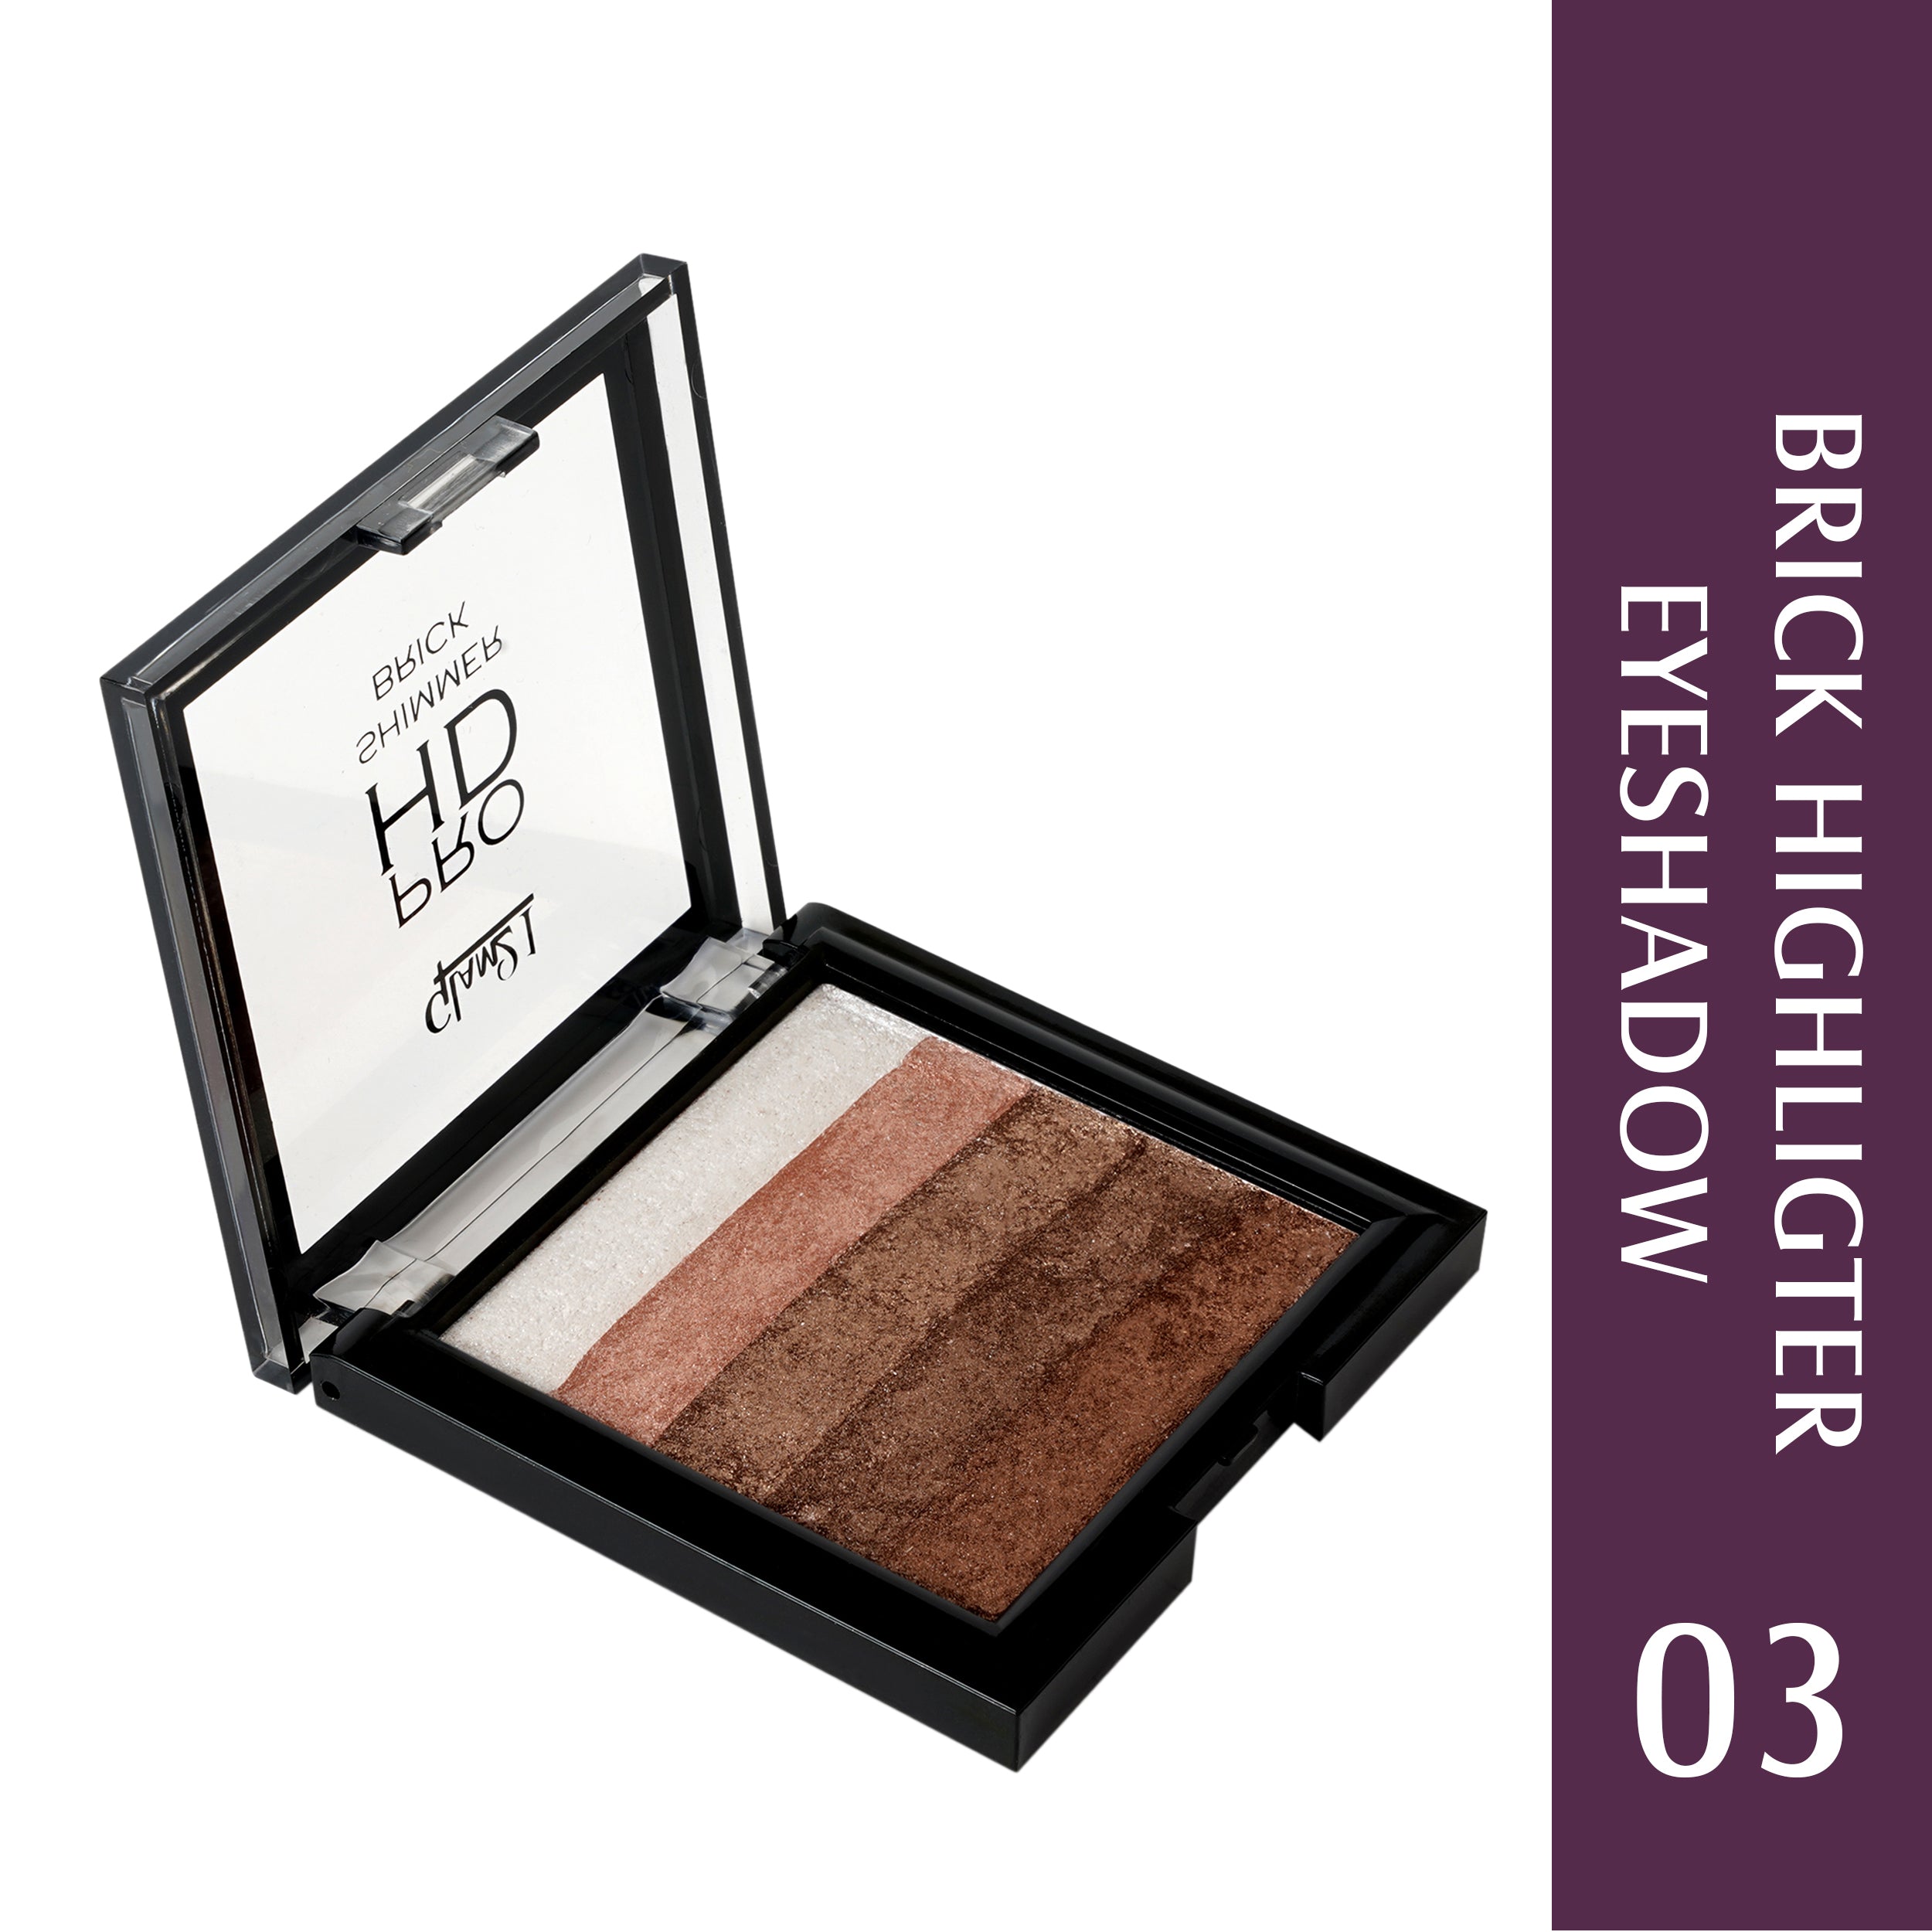 Glam21 Brick Eyeshadow Palette Long-Lasting| Shimmery Finish 5 Highly Pigmented Shades 7.5 g (Shade-03)